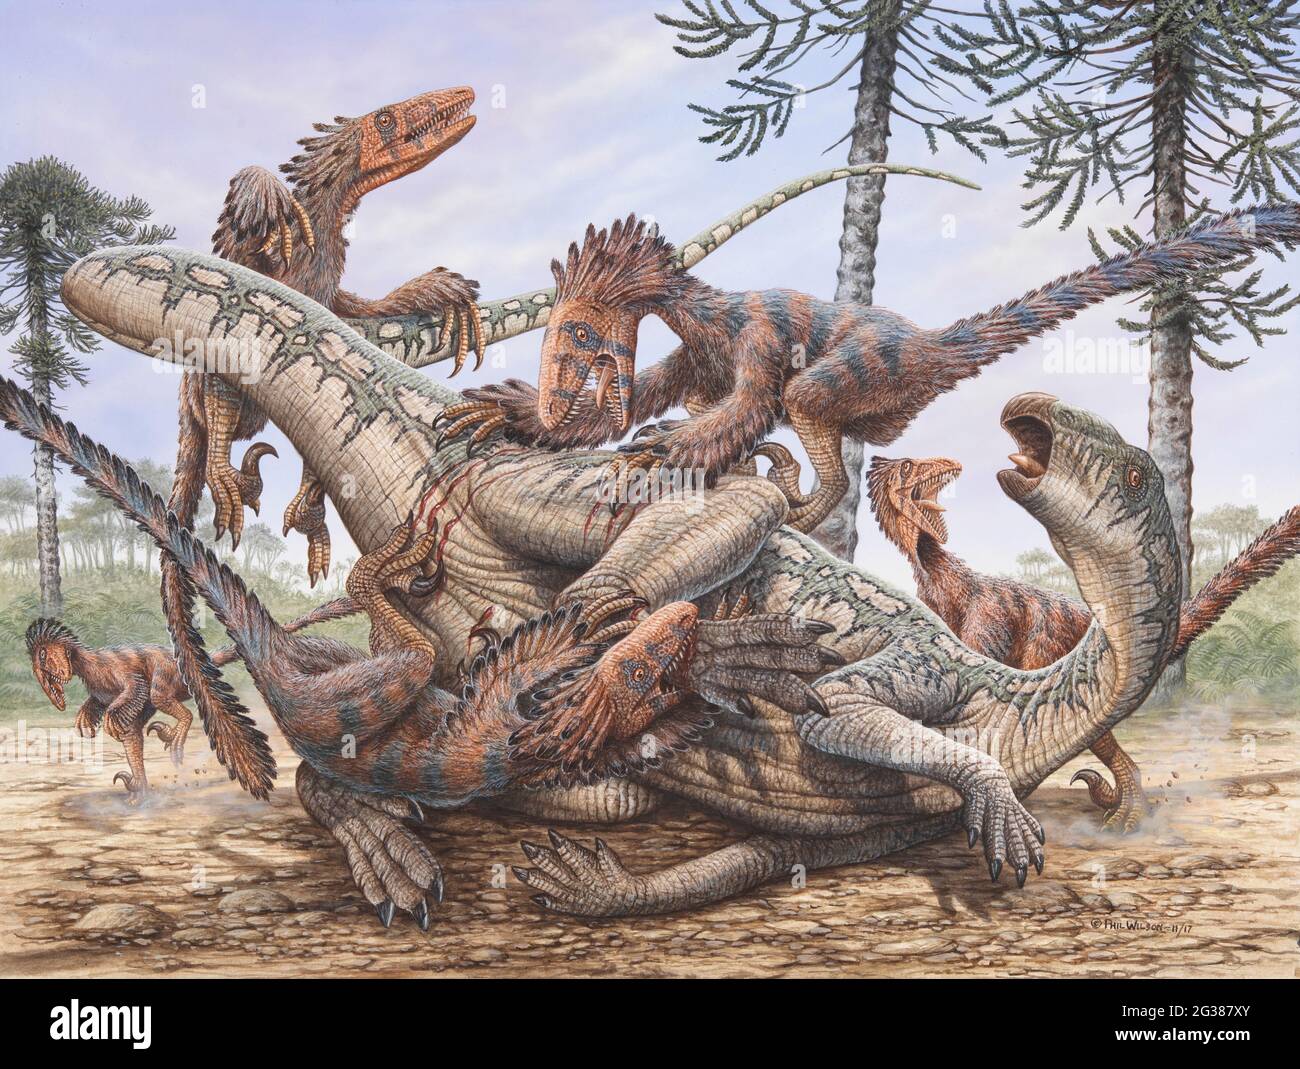 Deinonychus dinosaur, illustration Stock Photo - Alamy